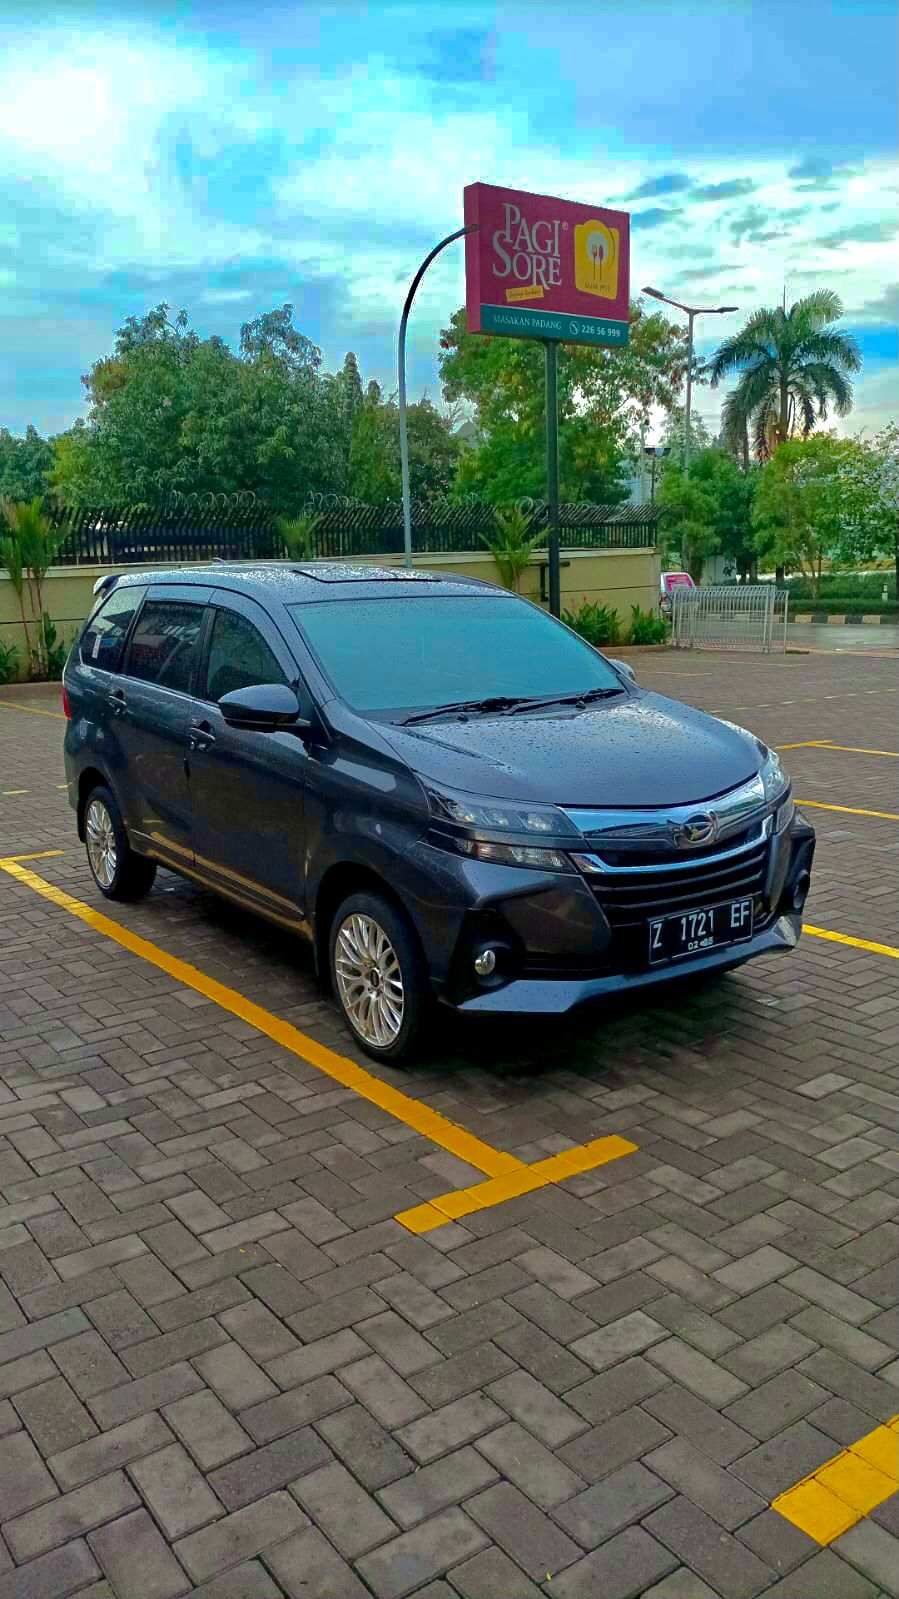 Rental Mobil Avanza Di Surabaya